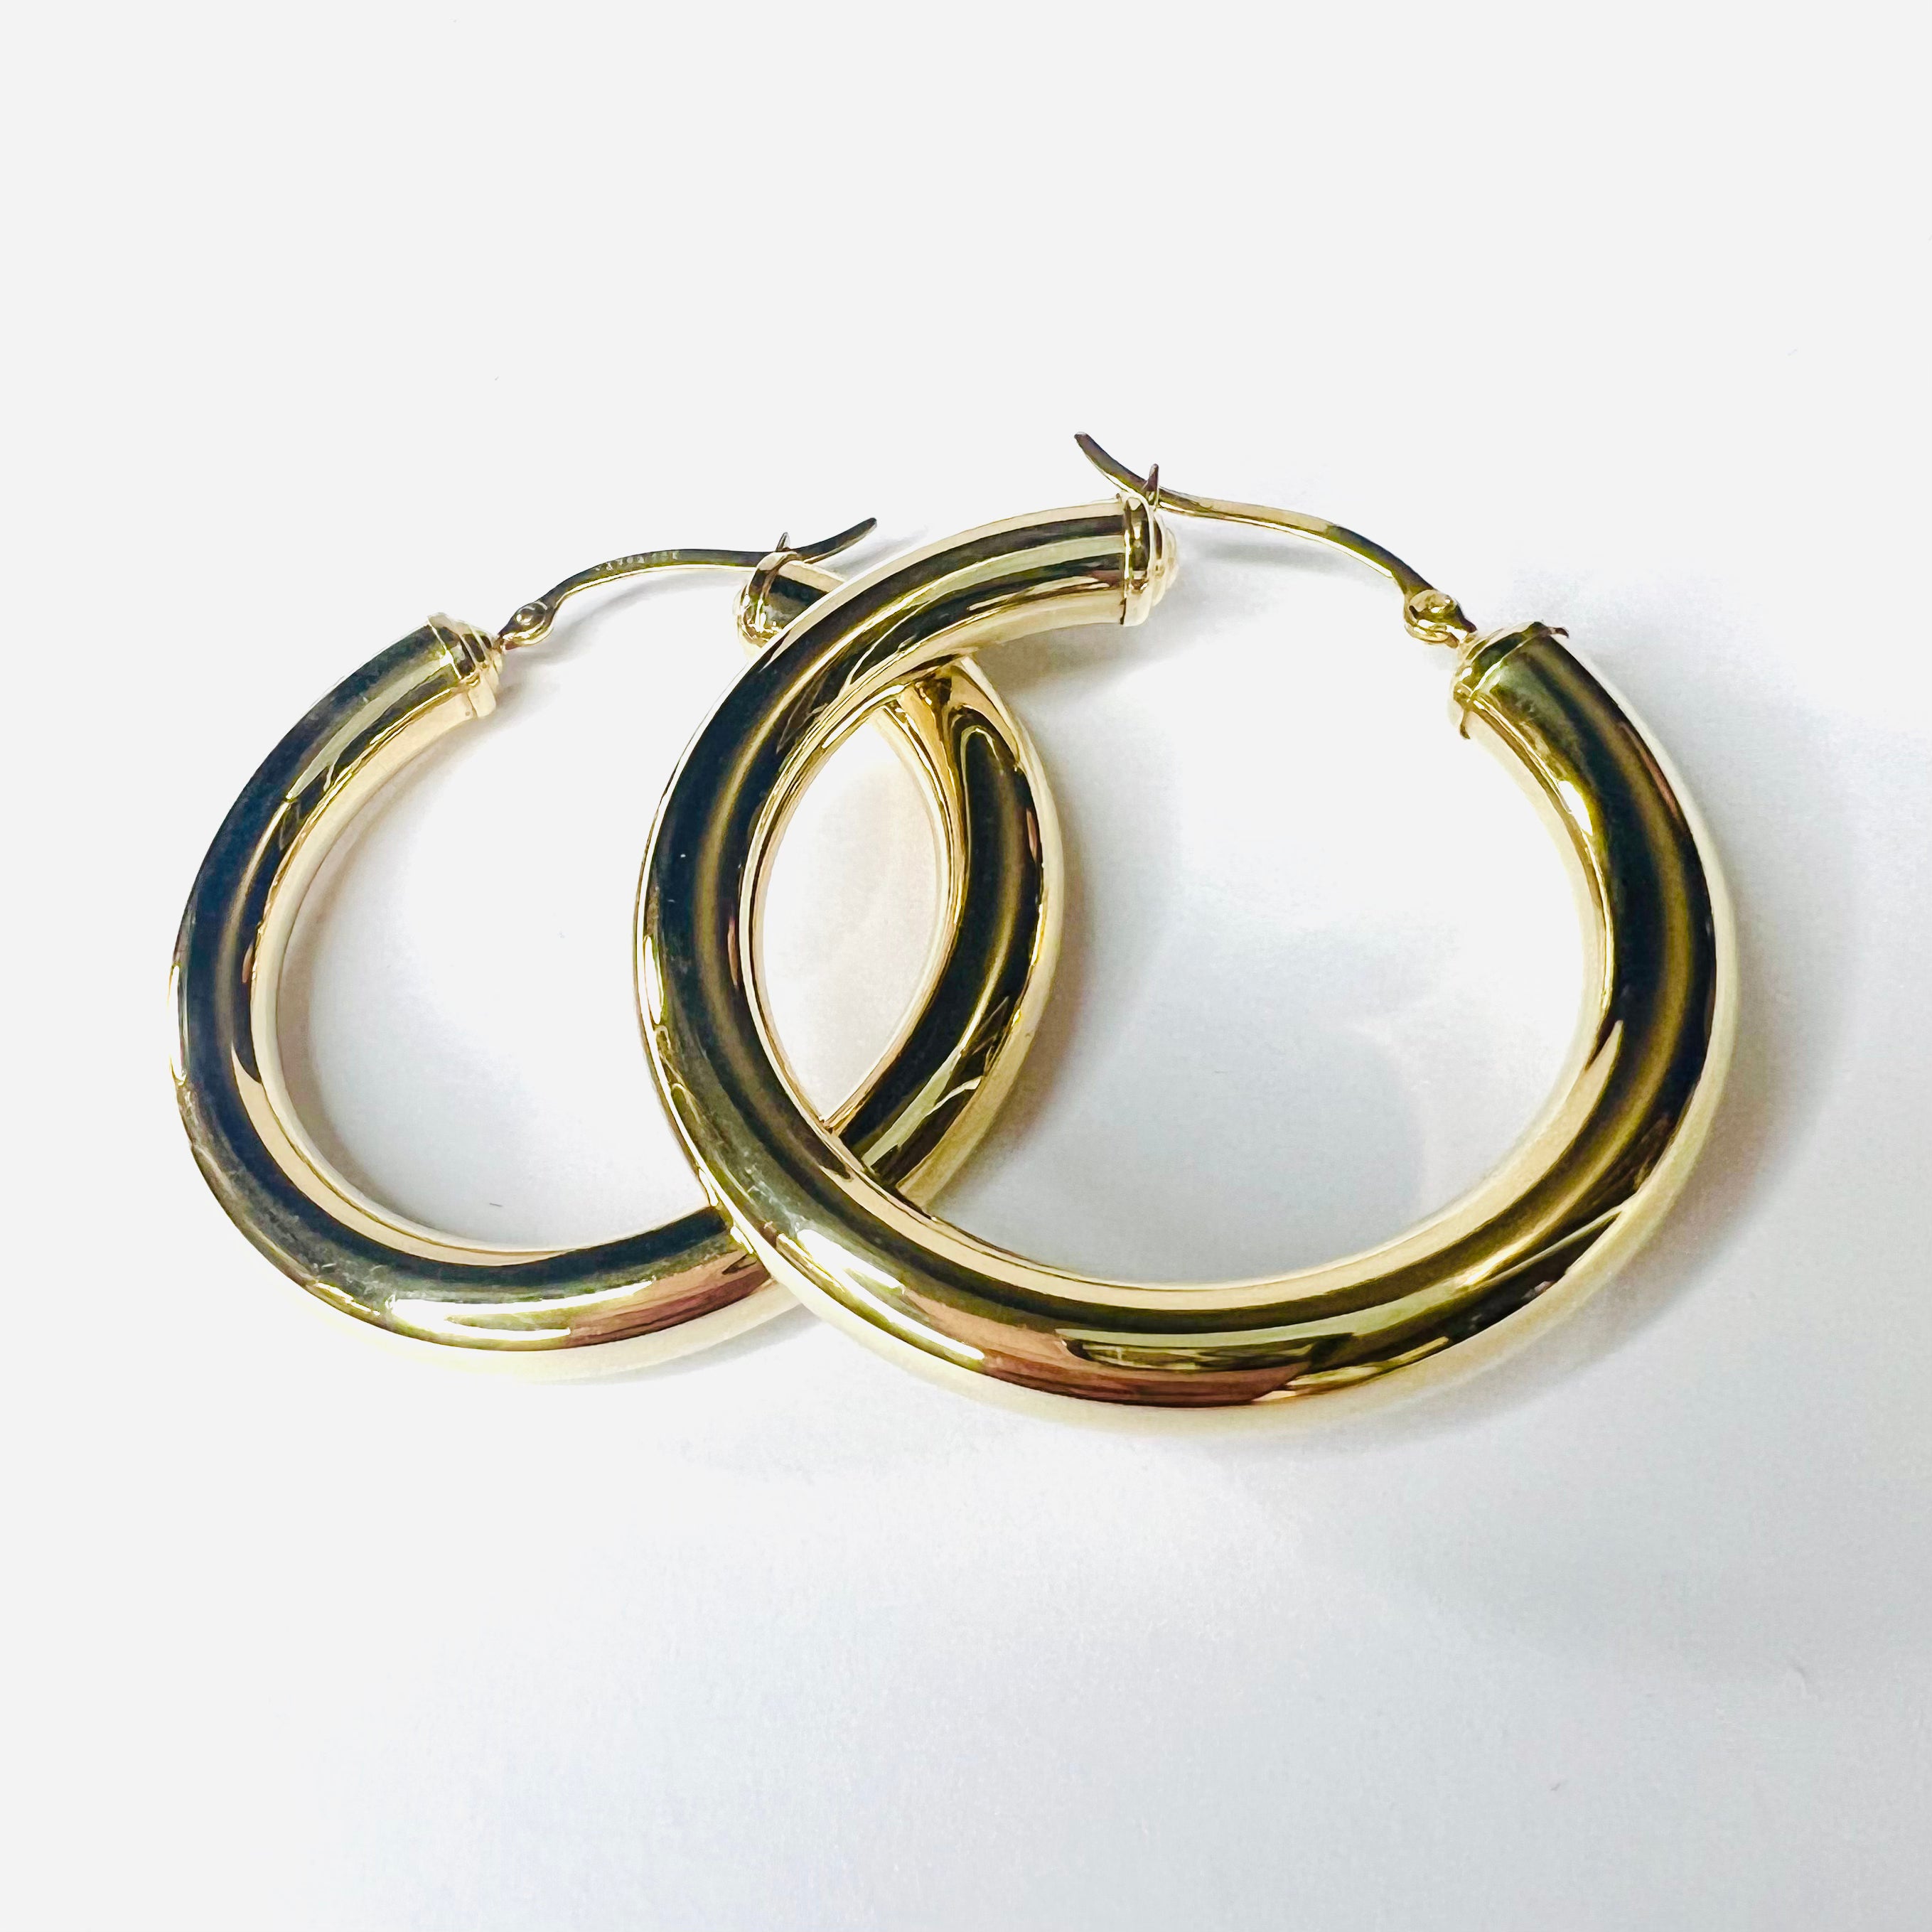 New 10K Solid Yellow Gold Hoop Earrings 1.5"